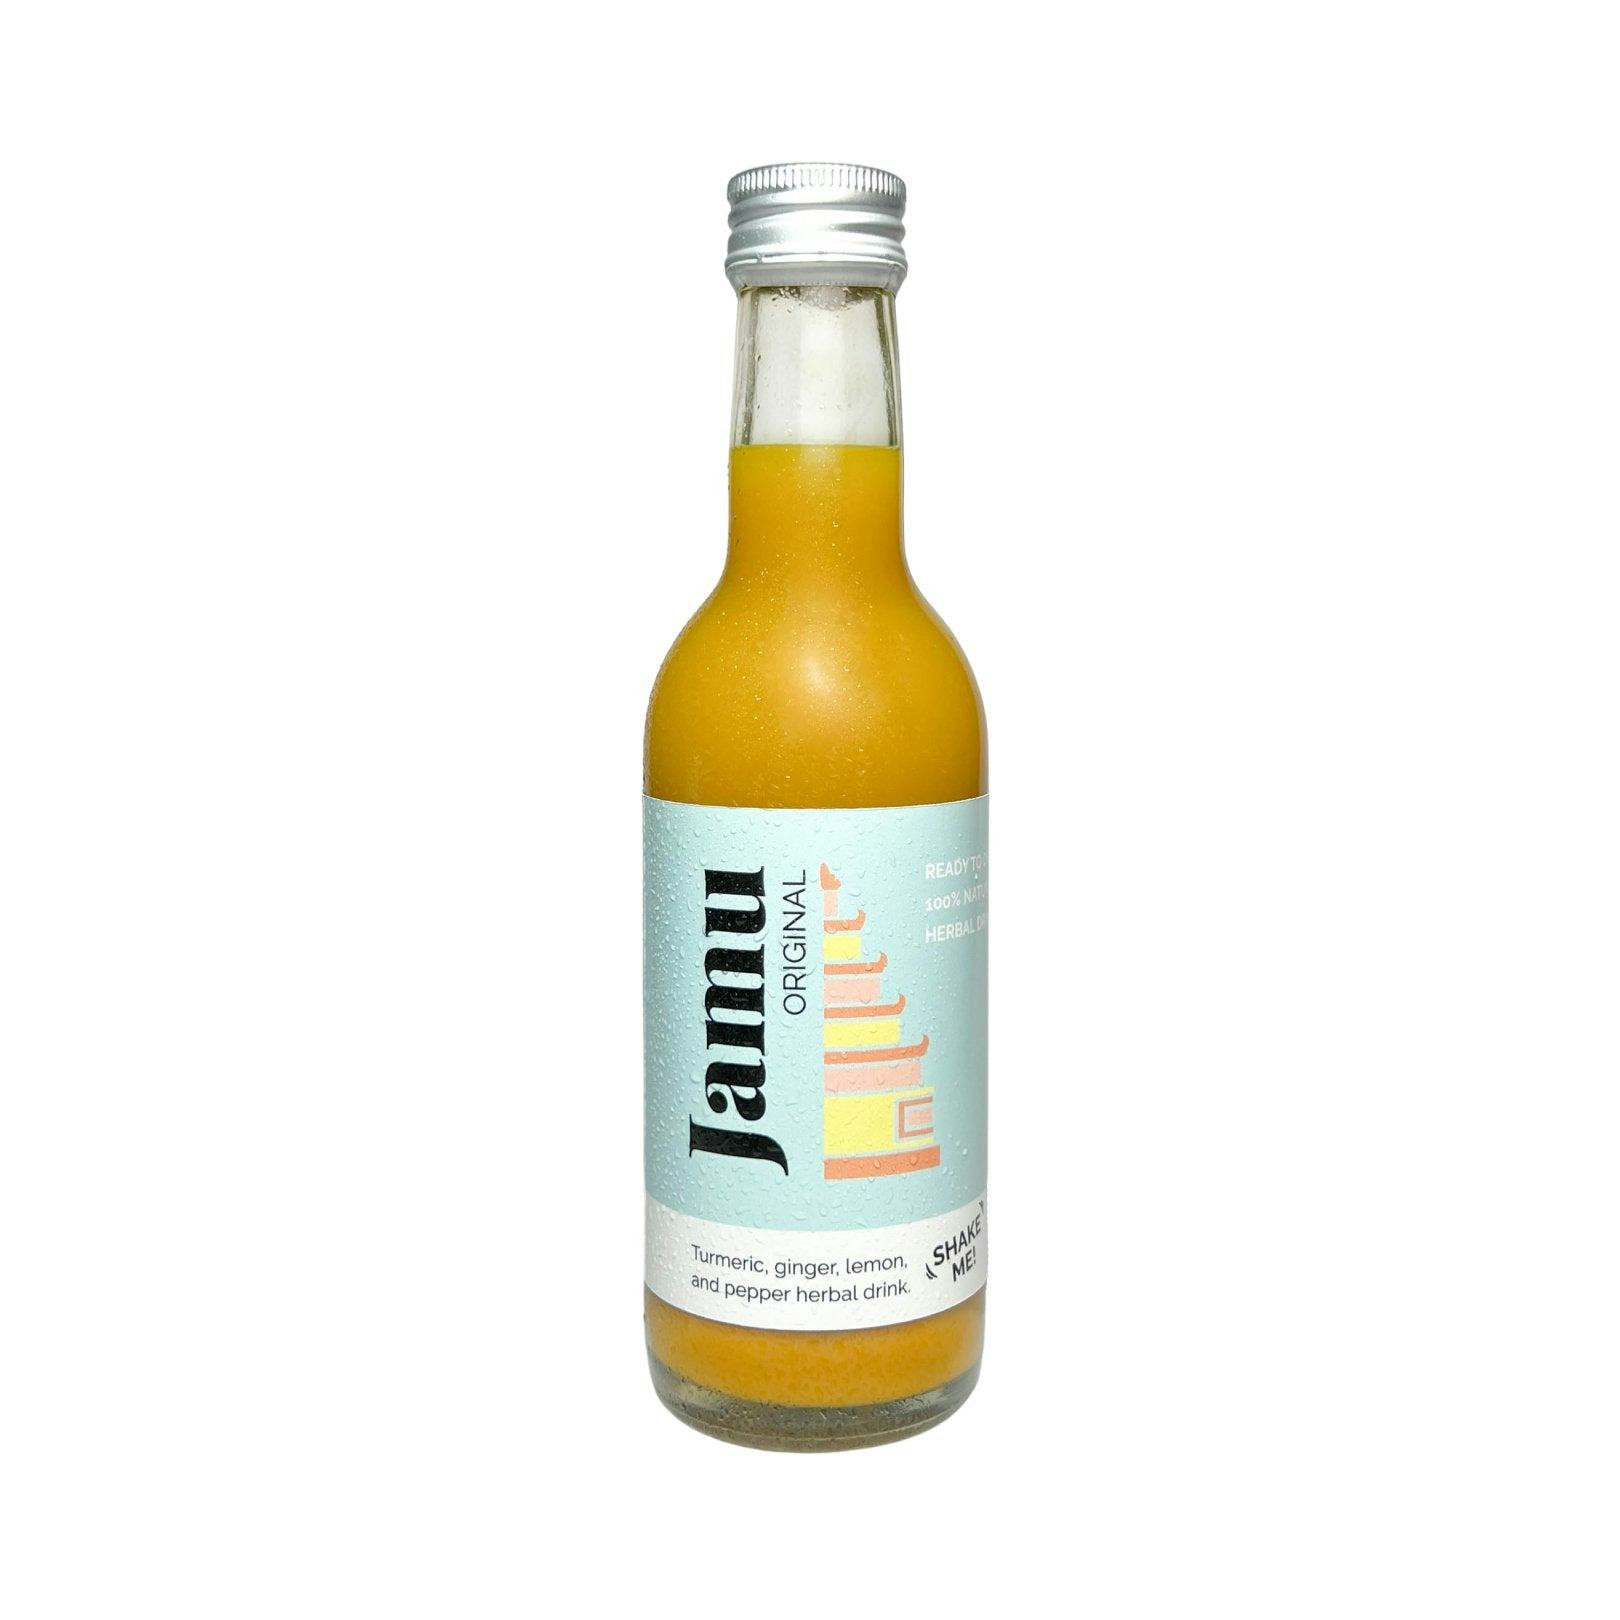 Jamu Original, Curcuma drink, produit artisanal en vente directe en Suisse